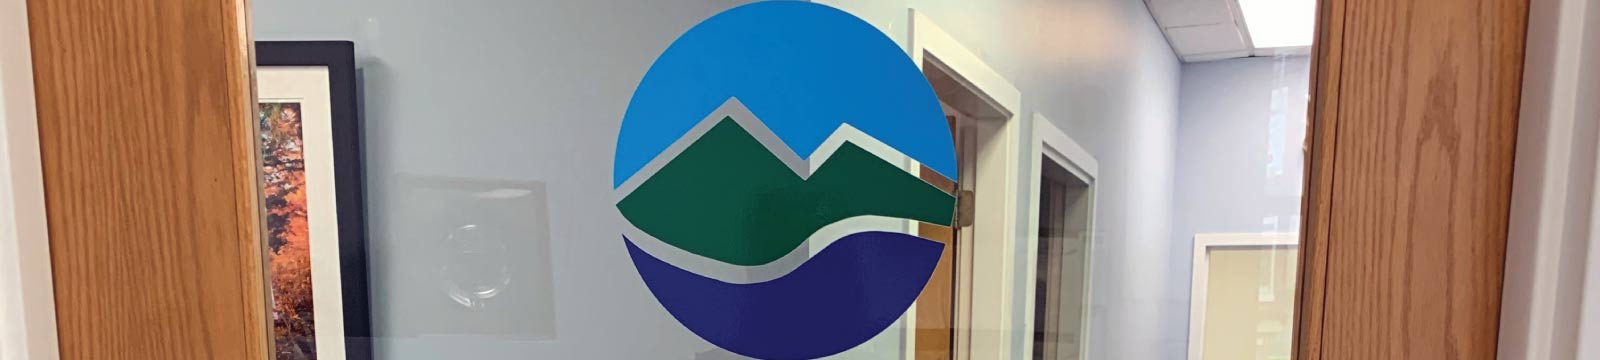 Champlain National Bank Logo on Door